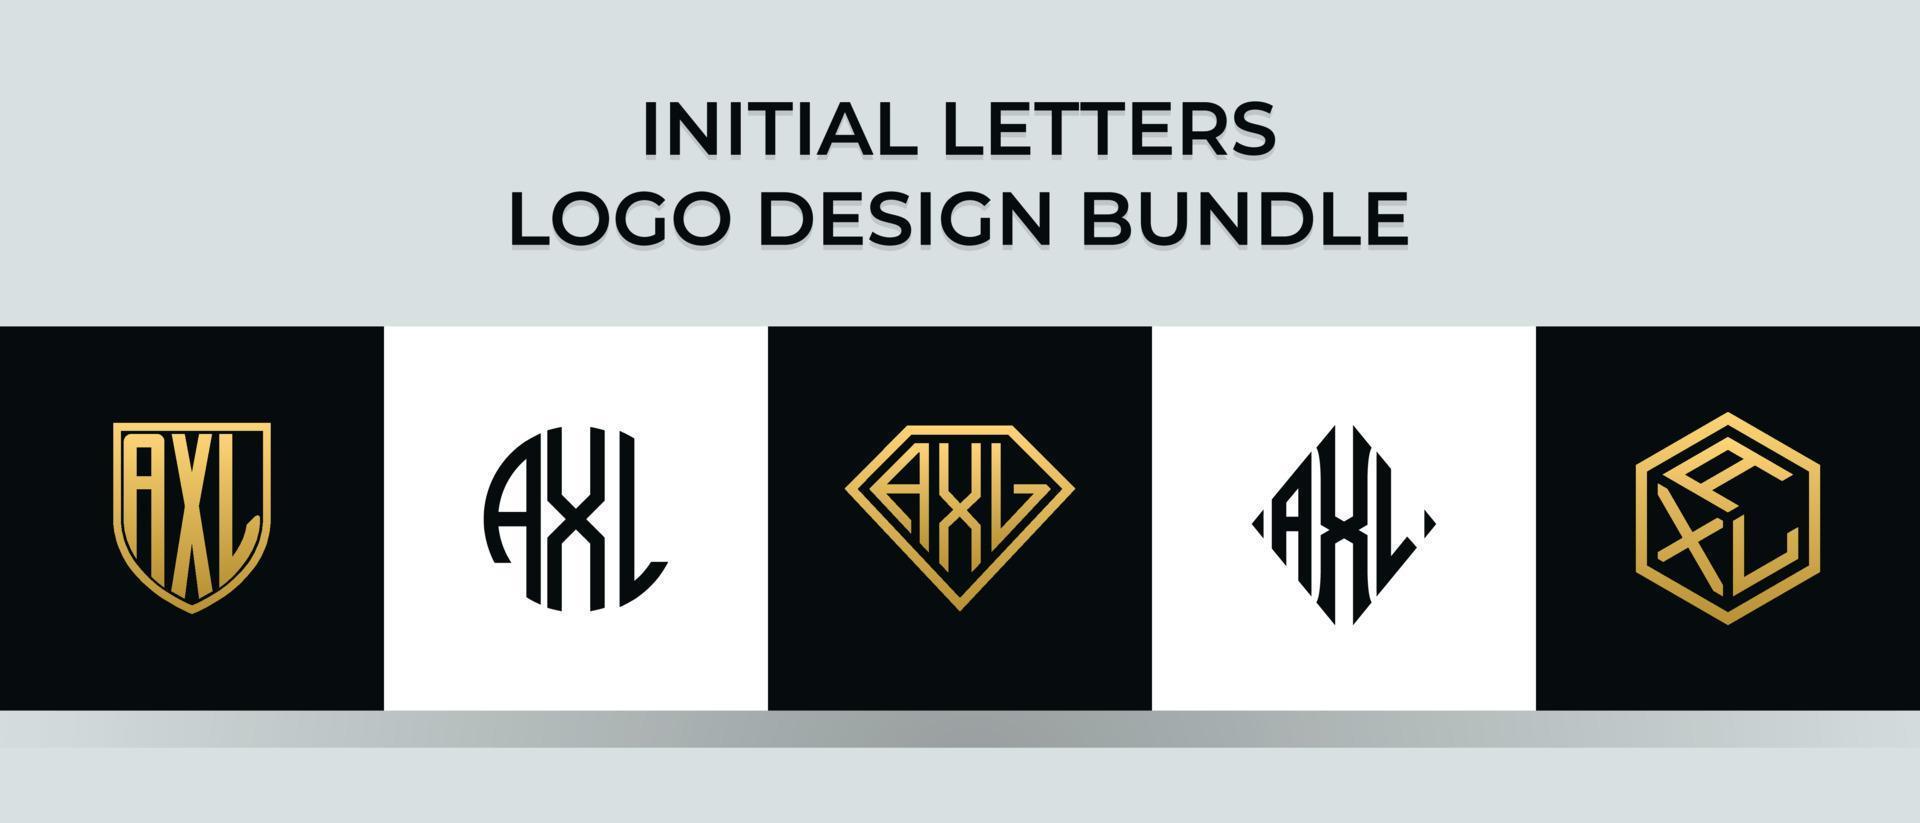 Initial letters AXL logo designs Bundle vector